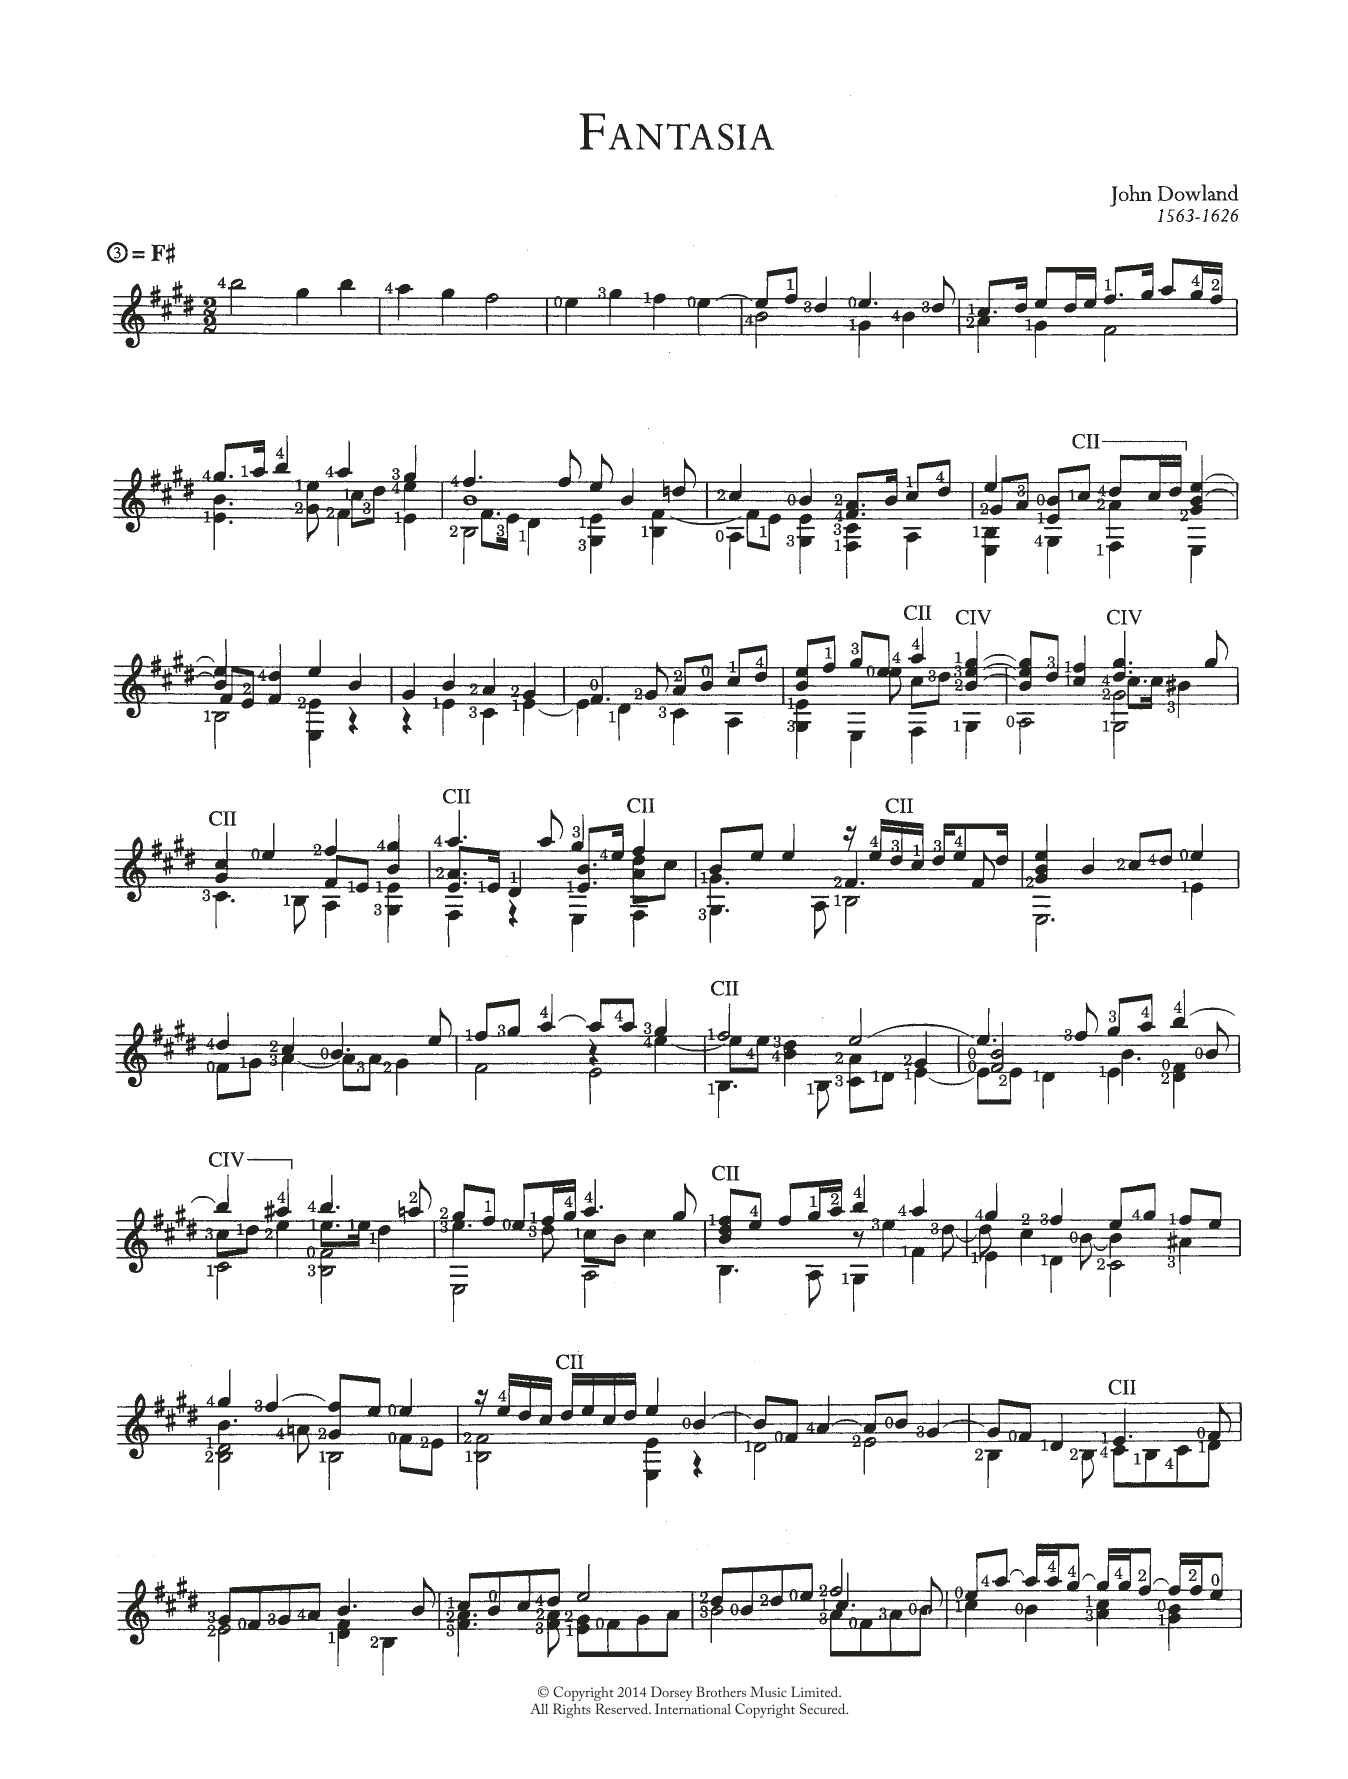 John Dowland Fantasia Sheet Music Notes & Chords for Guitar - Download or Print PDF